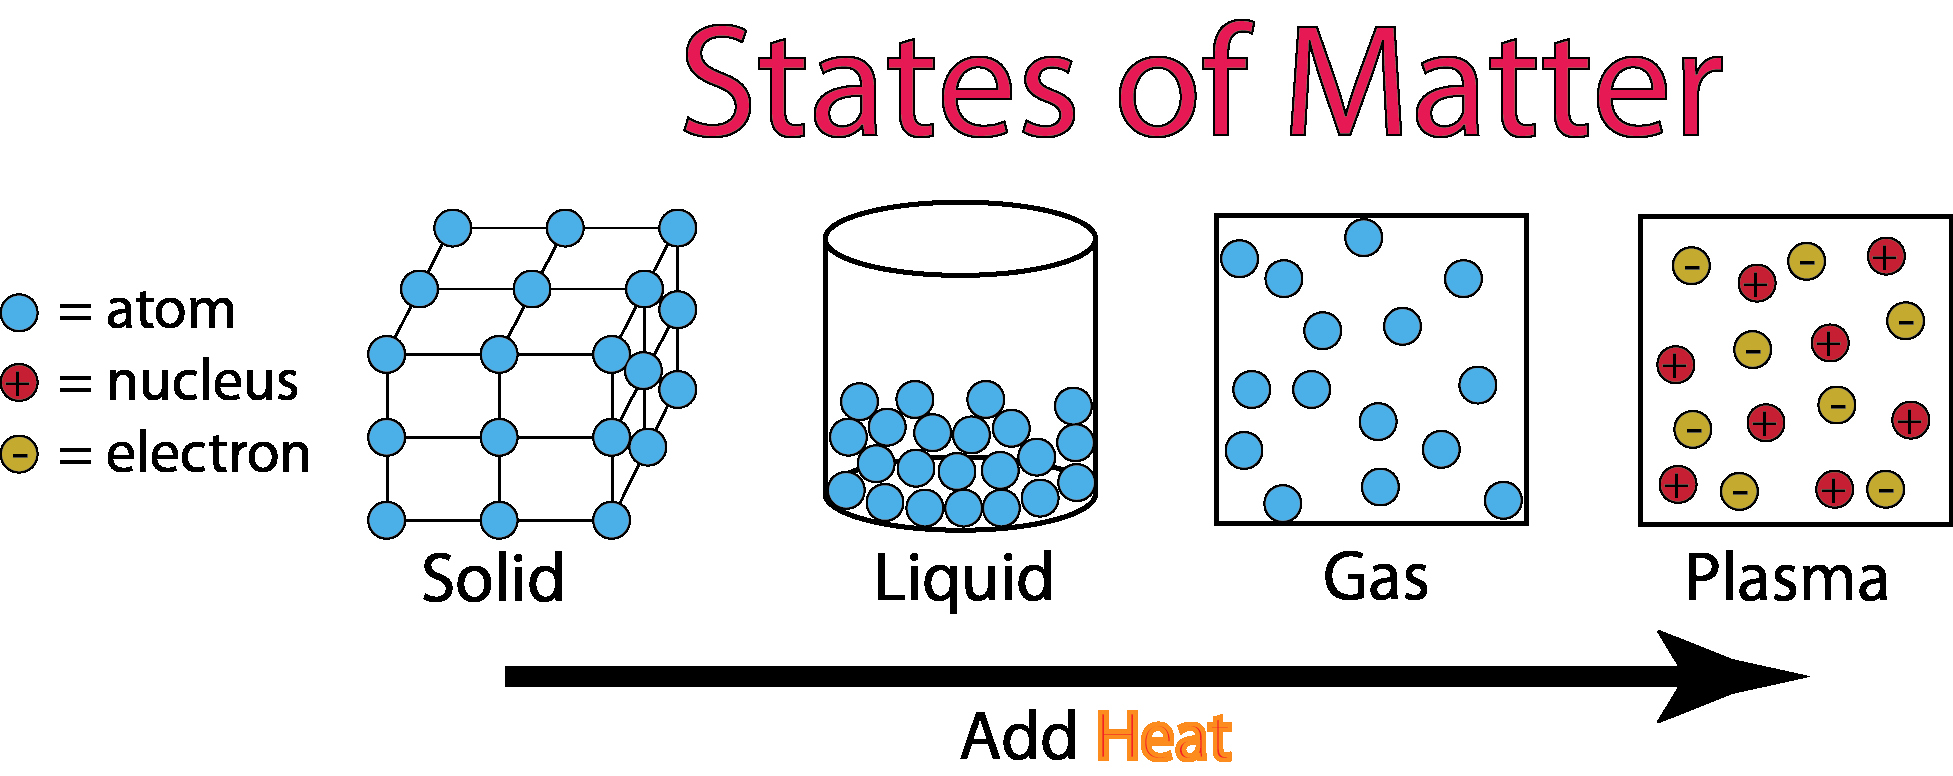 States Of Matter Worksheet Chemistry Best Of Phases Of Matter Chemwiki